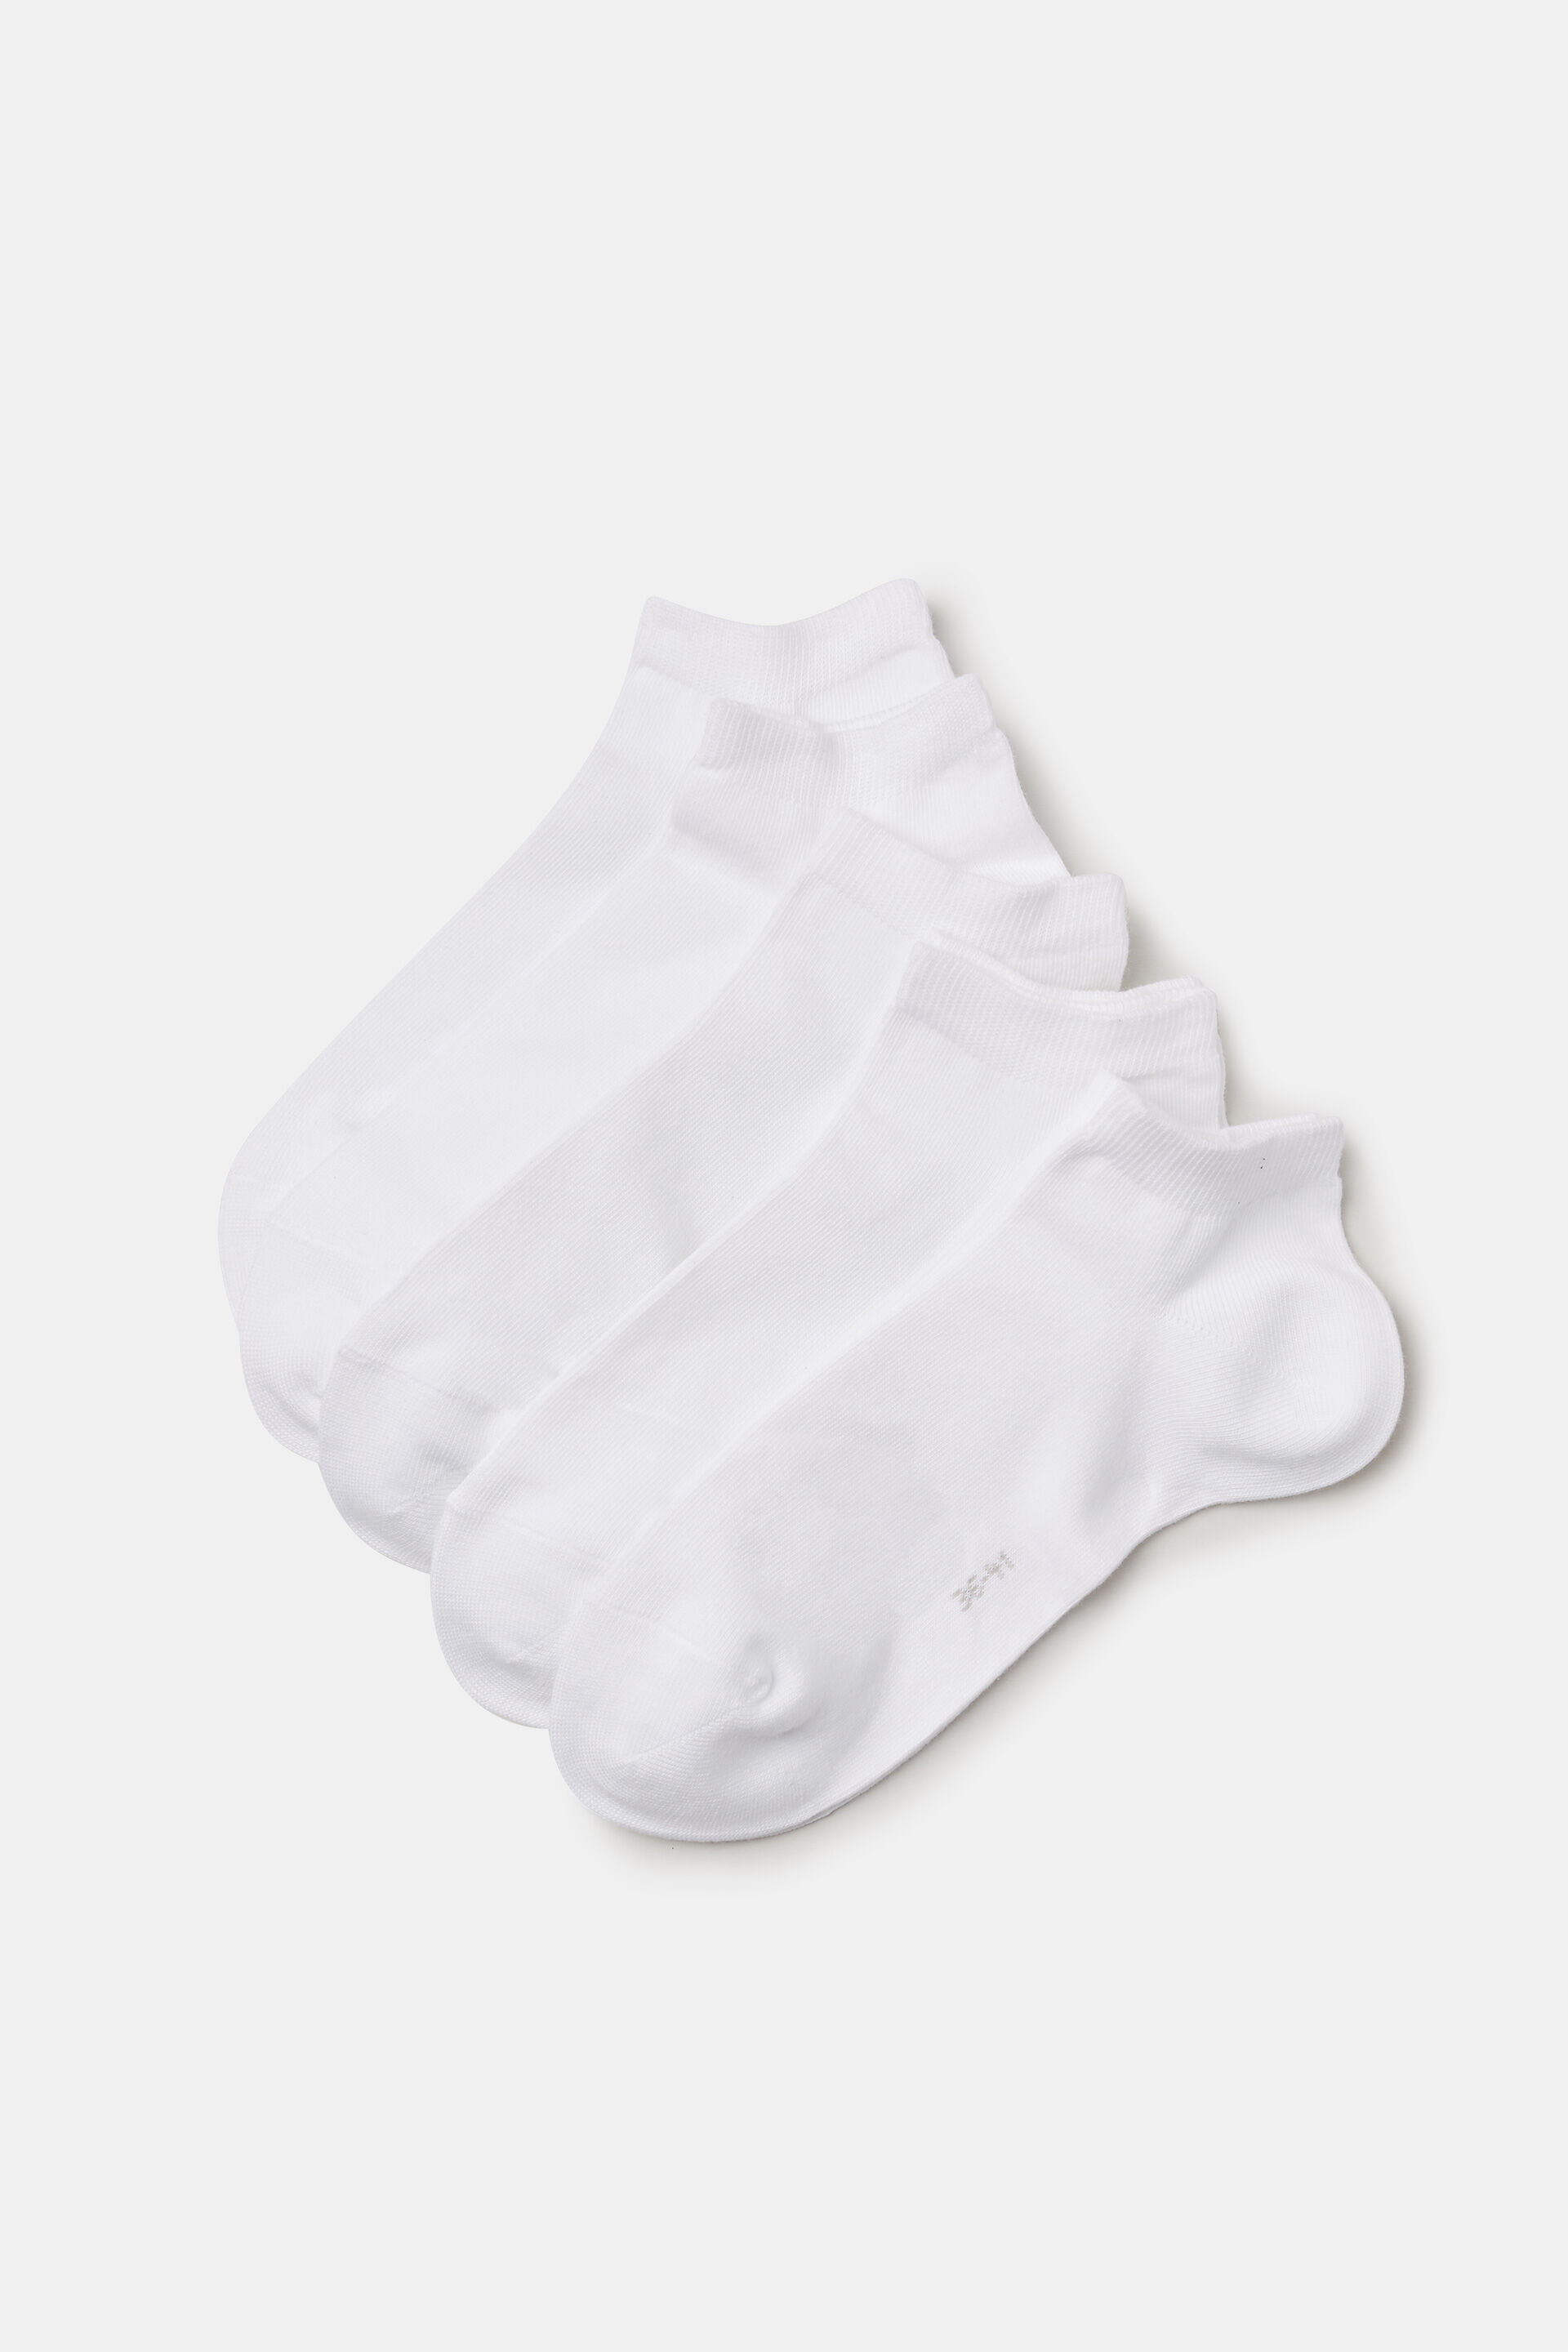 Esprit cotton pack of 5-pair blended socks